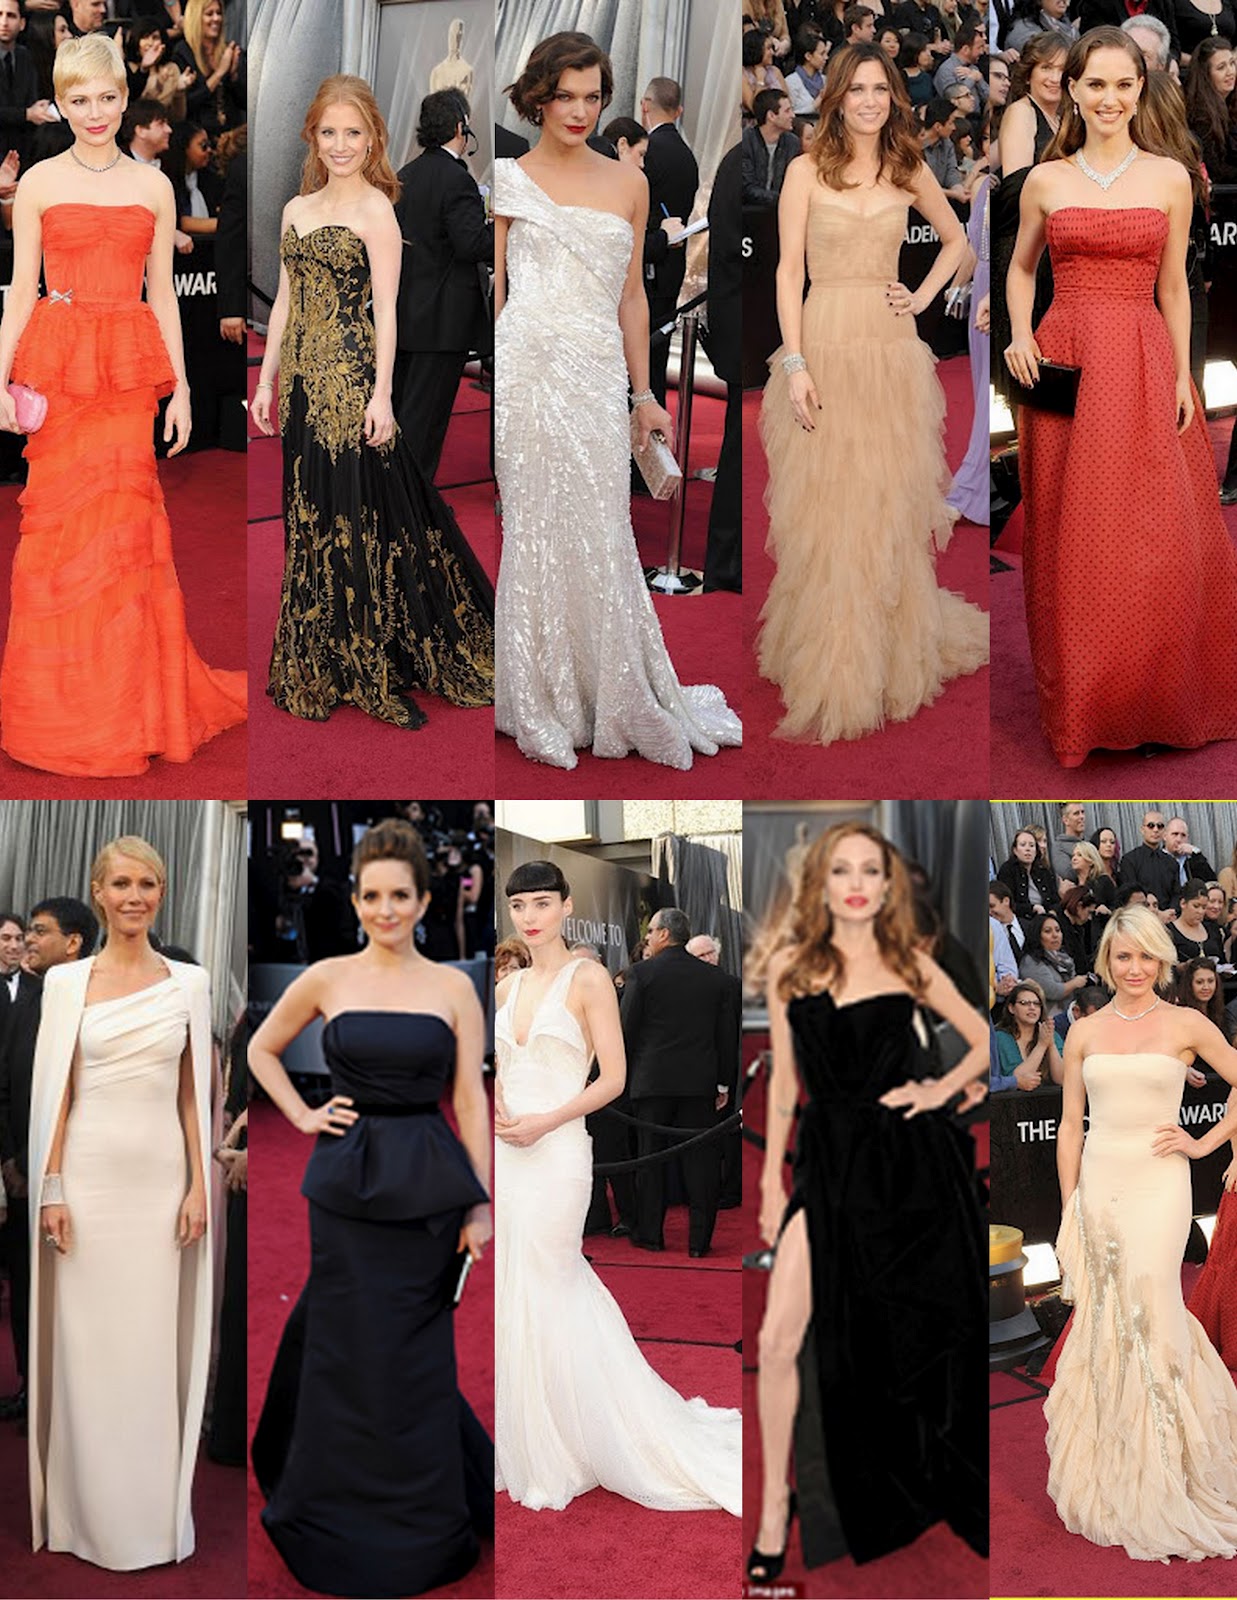 http://2.bp.blogspot.com/-tgfTuiRfeVM/T0sF7s3N0oI/AAAAAAAAGFk/pwyMluCaDI4/s1600/Academy_Awards_Oscars_2012_best_dressed_red_carpet.jpg